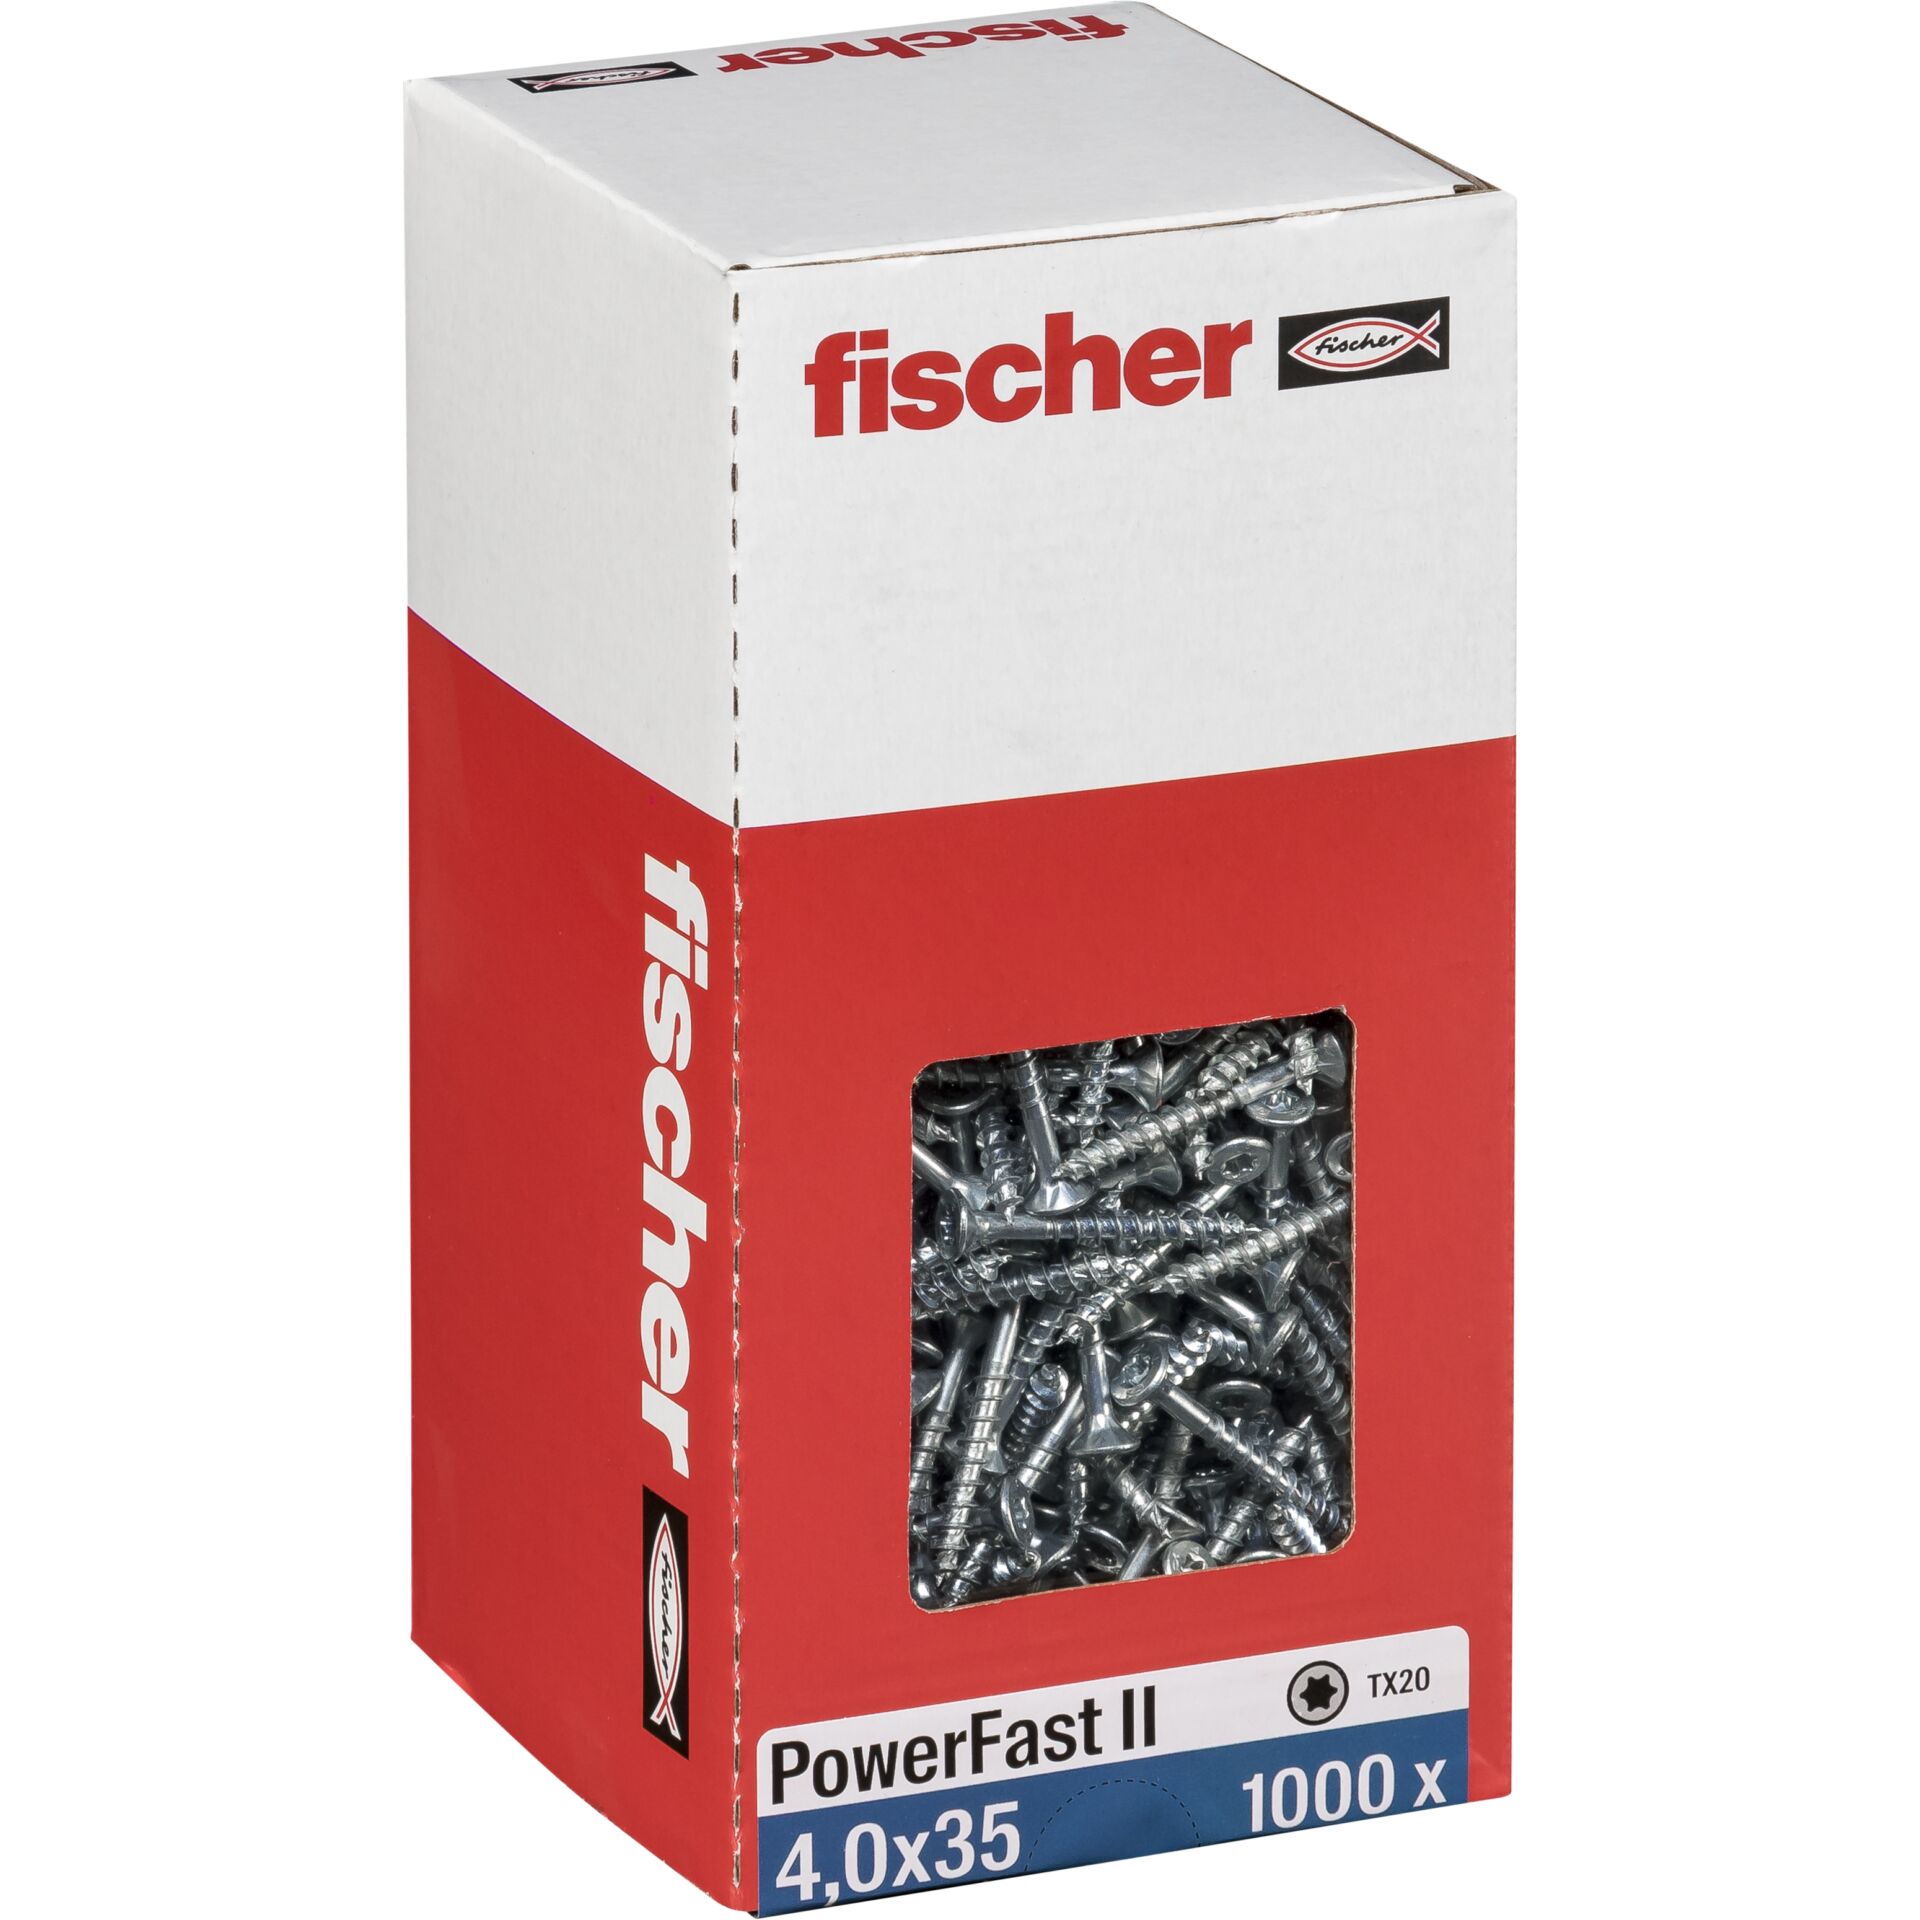 Fischer PowerFast II 4,0x35 SK TX TG blvz 1000